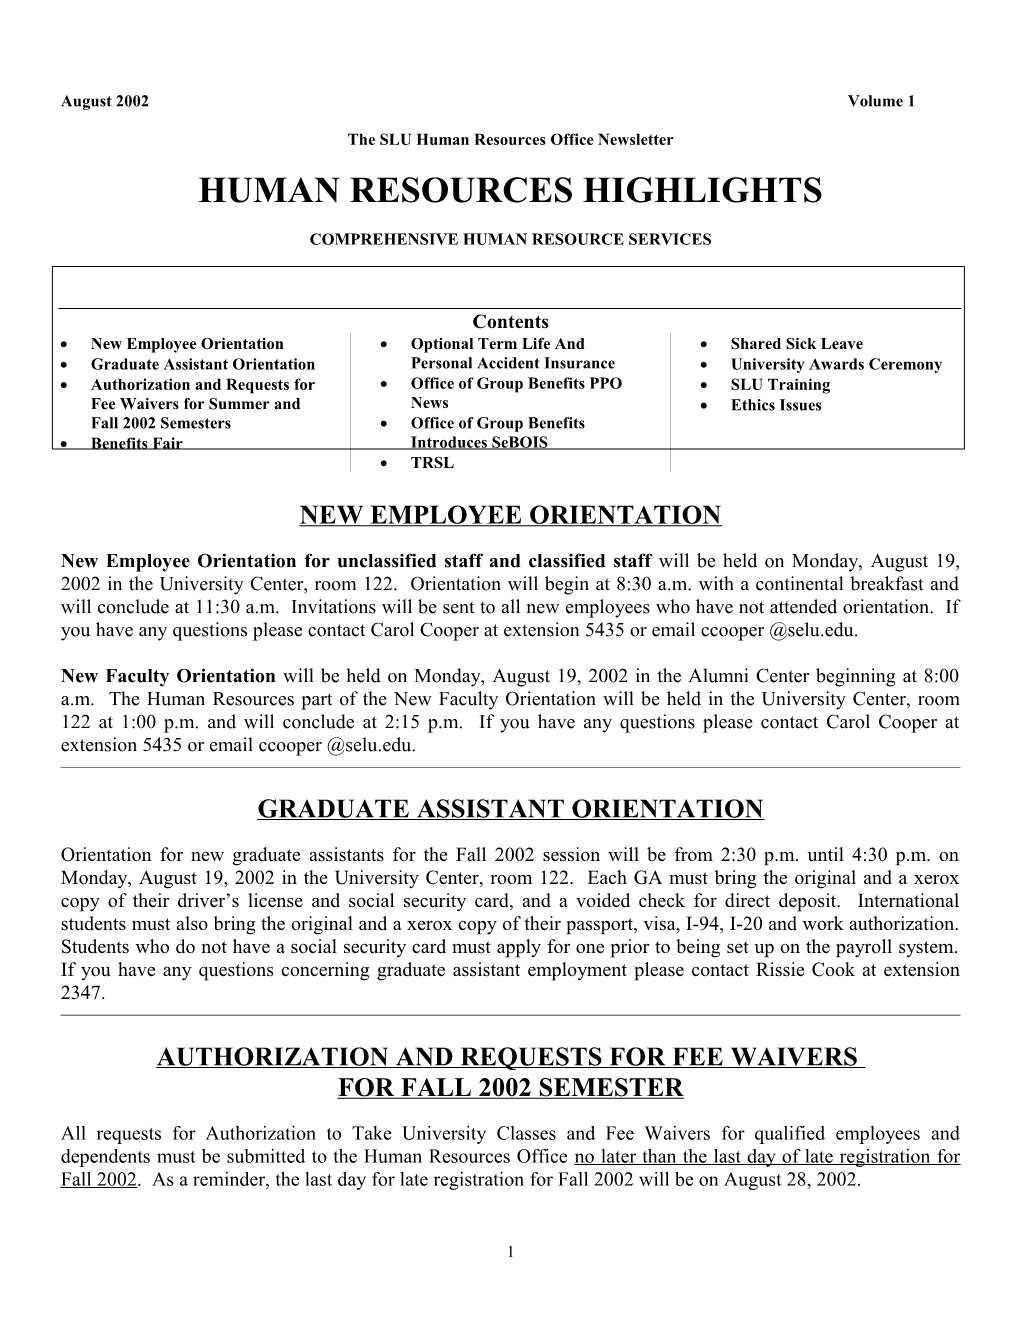 The SLU Human Resource Office Newsletter